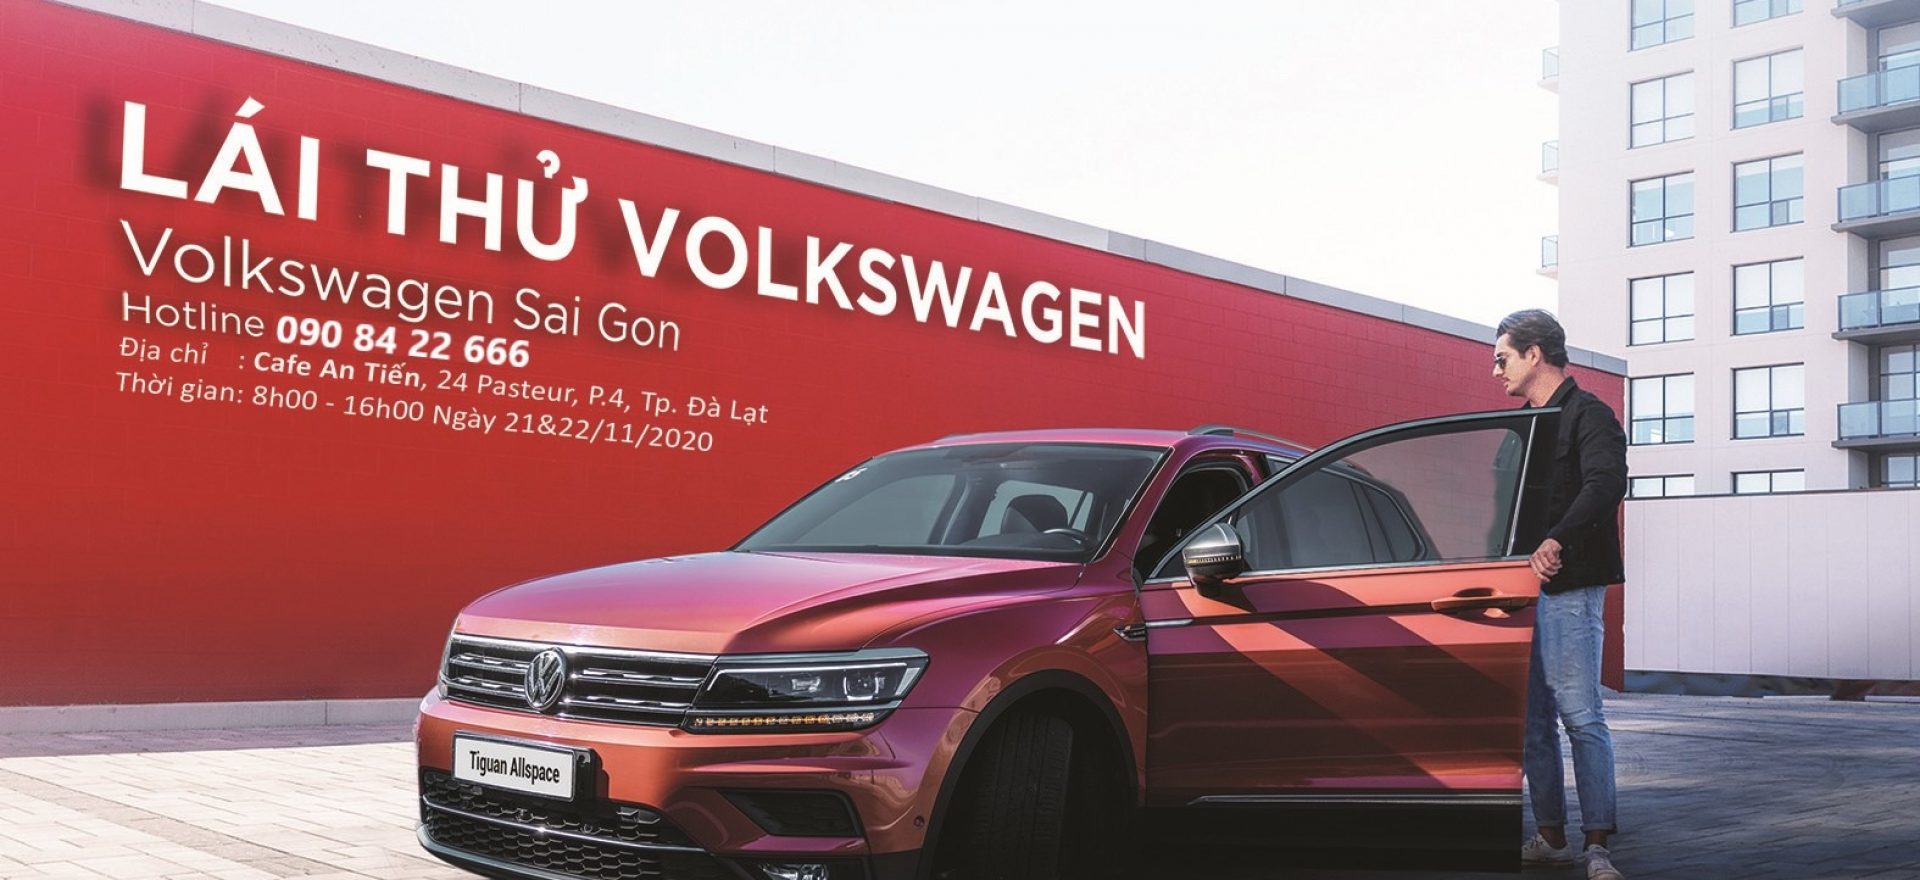 lai thu xe volkswagen tai thanh pho da lat - Volkswagen Sai Gon